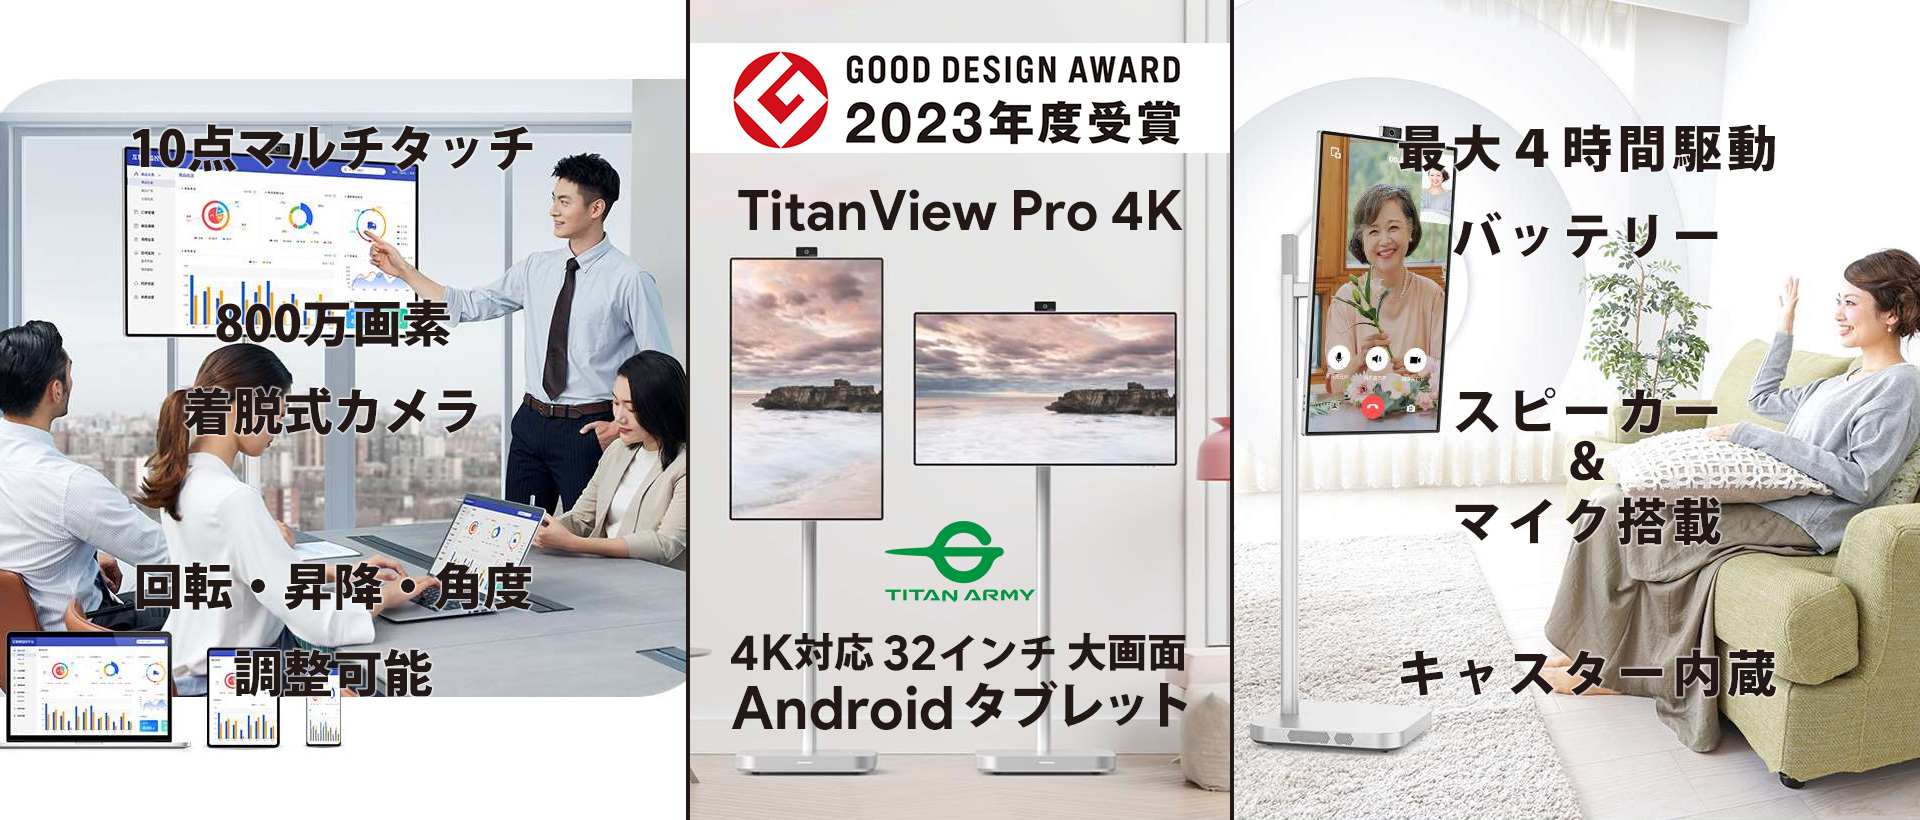 4K対応 32インチ 大画面 Androidタブレット「Titan View Pro 4K」